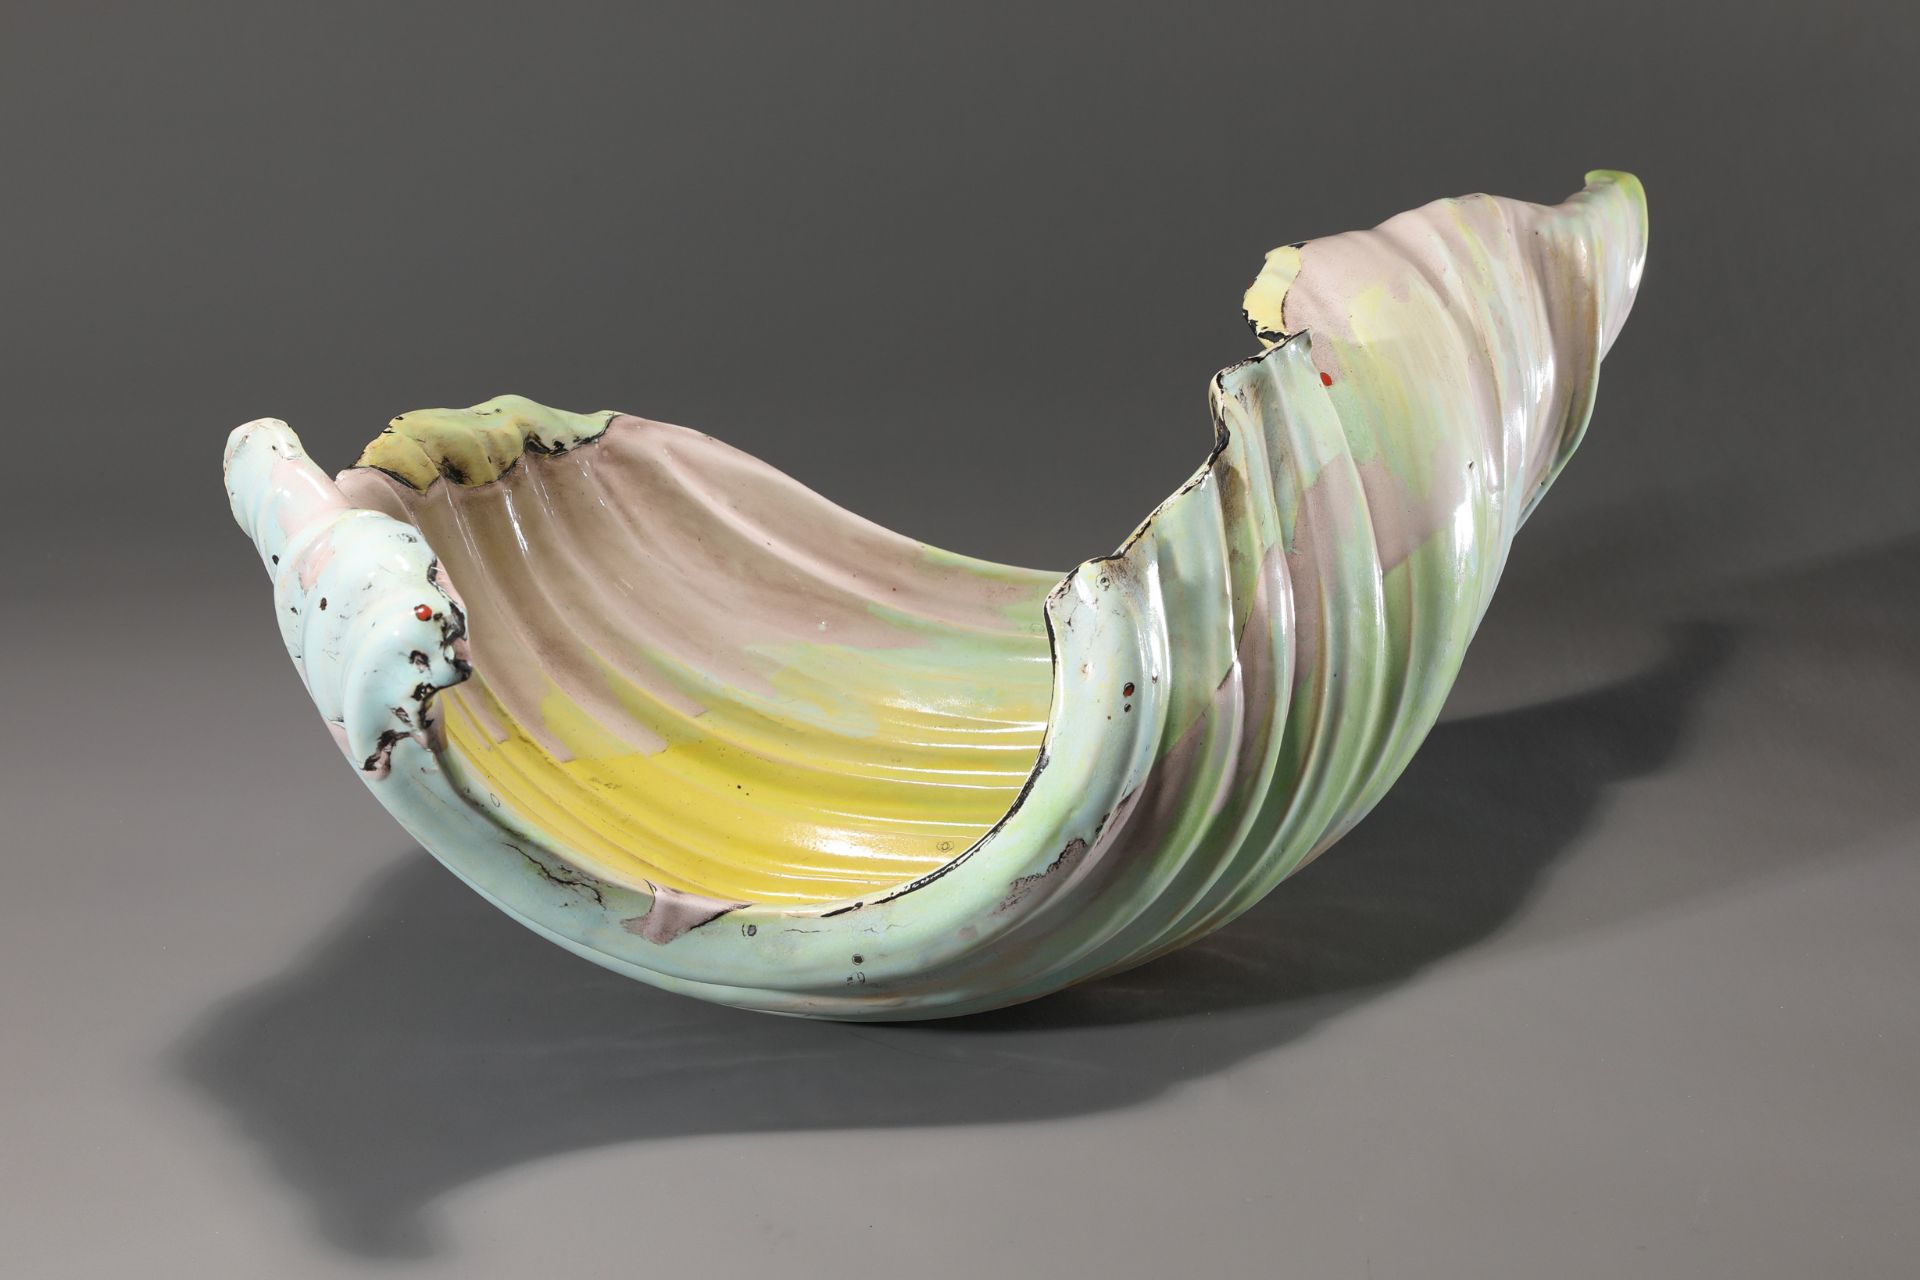 Karl Fulle, ceramic object wave, 2010